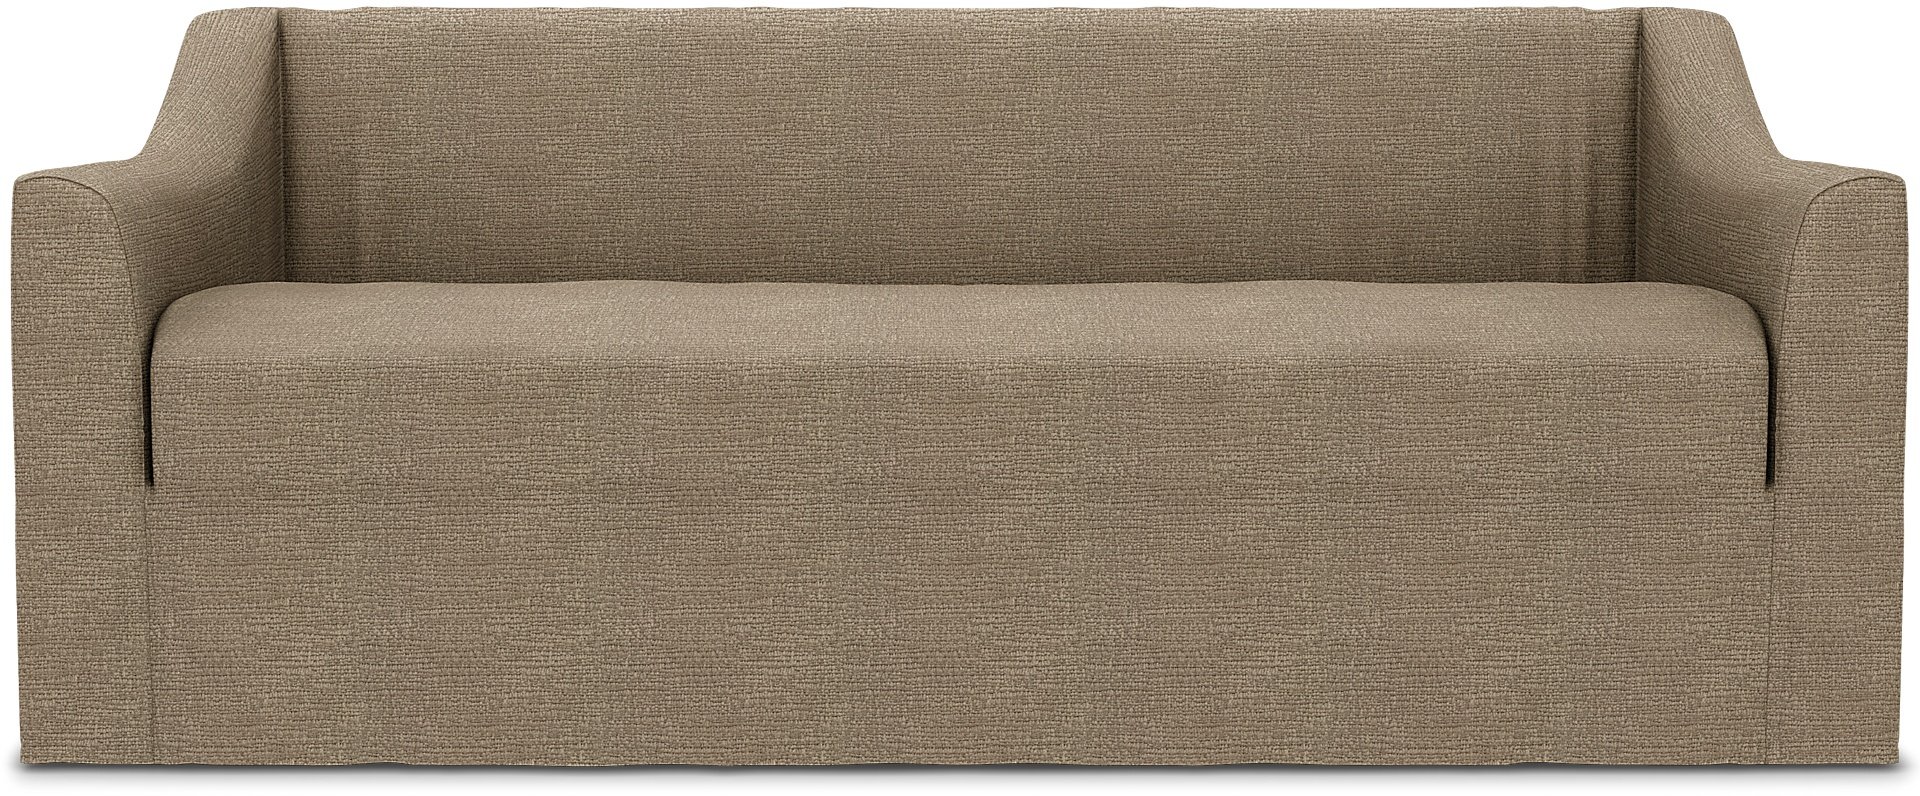 Farlov 2 Seater Sofa Cover, Camel, Boucle & Texture - Bemz